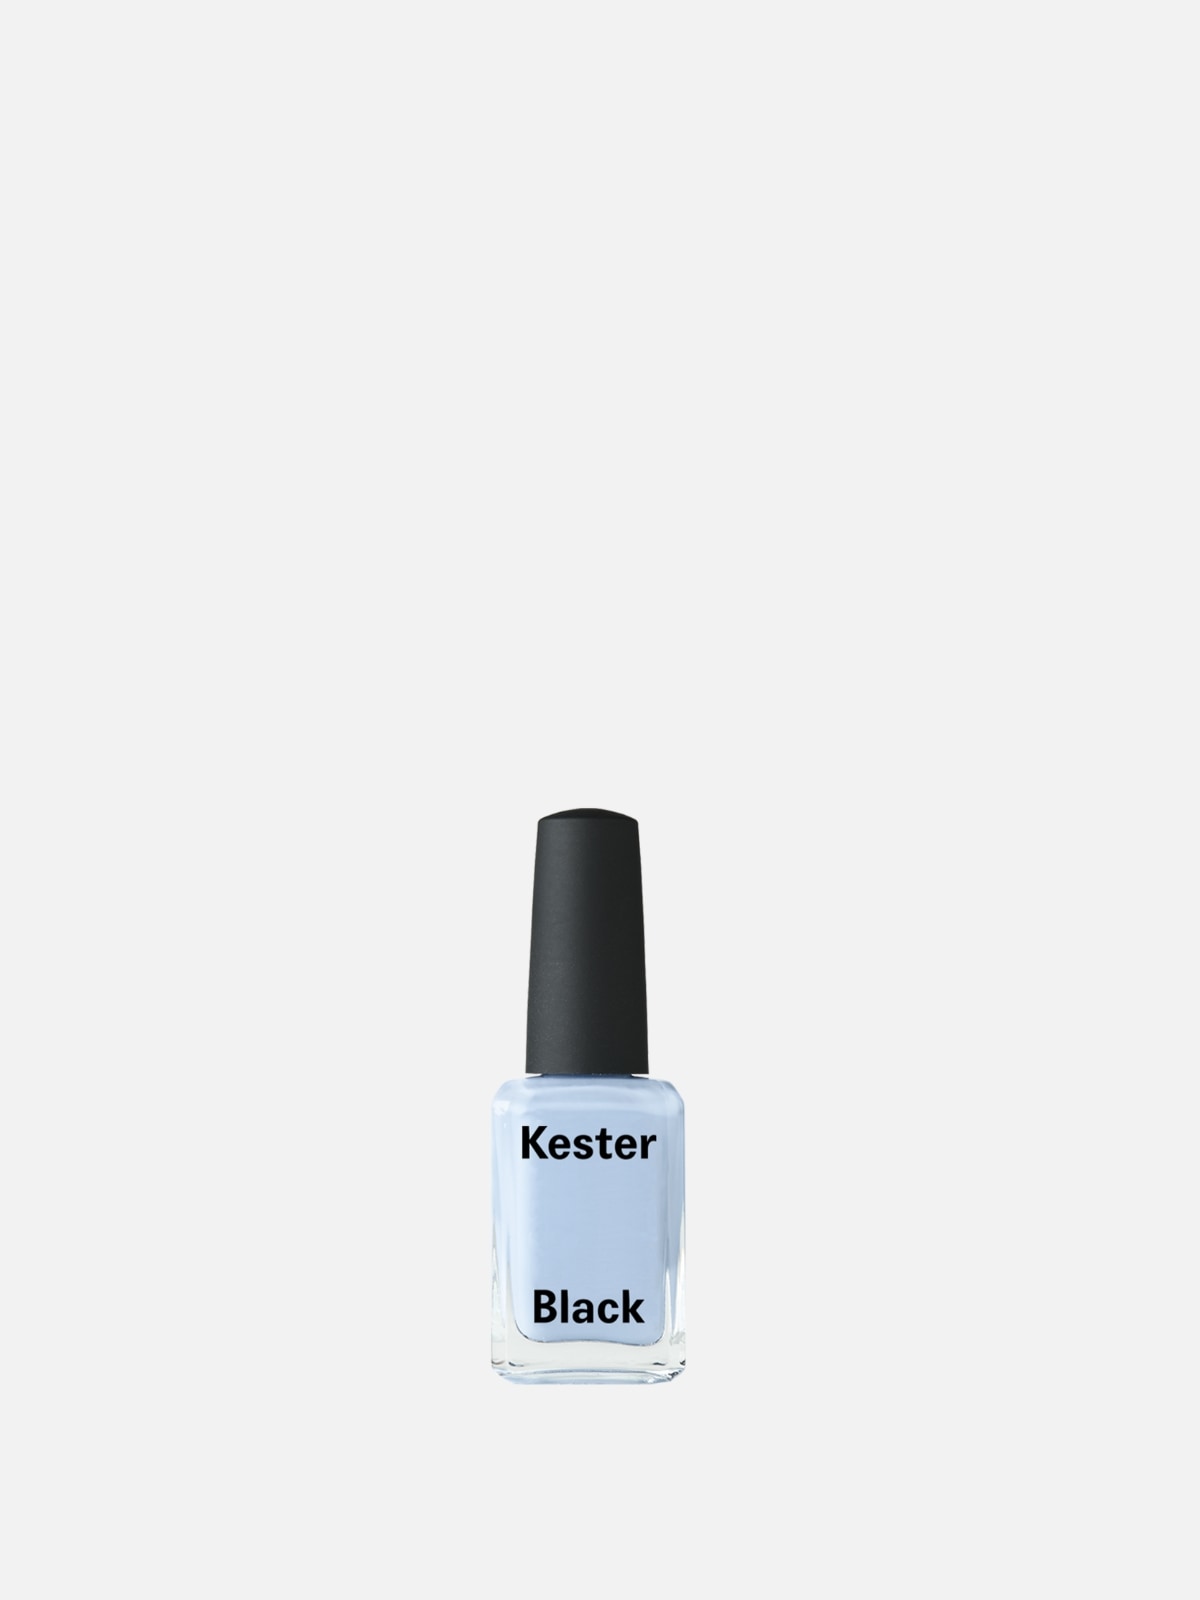 Kester Black - Forget Me Not - Smalto color fiordaliso